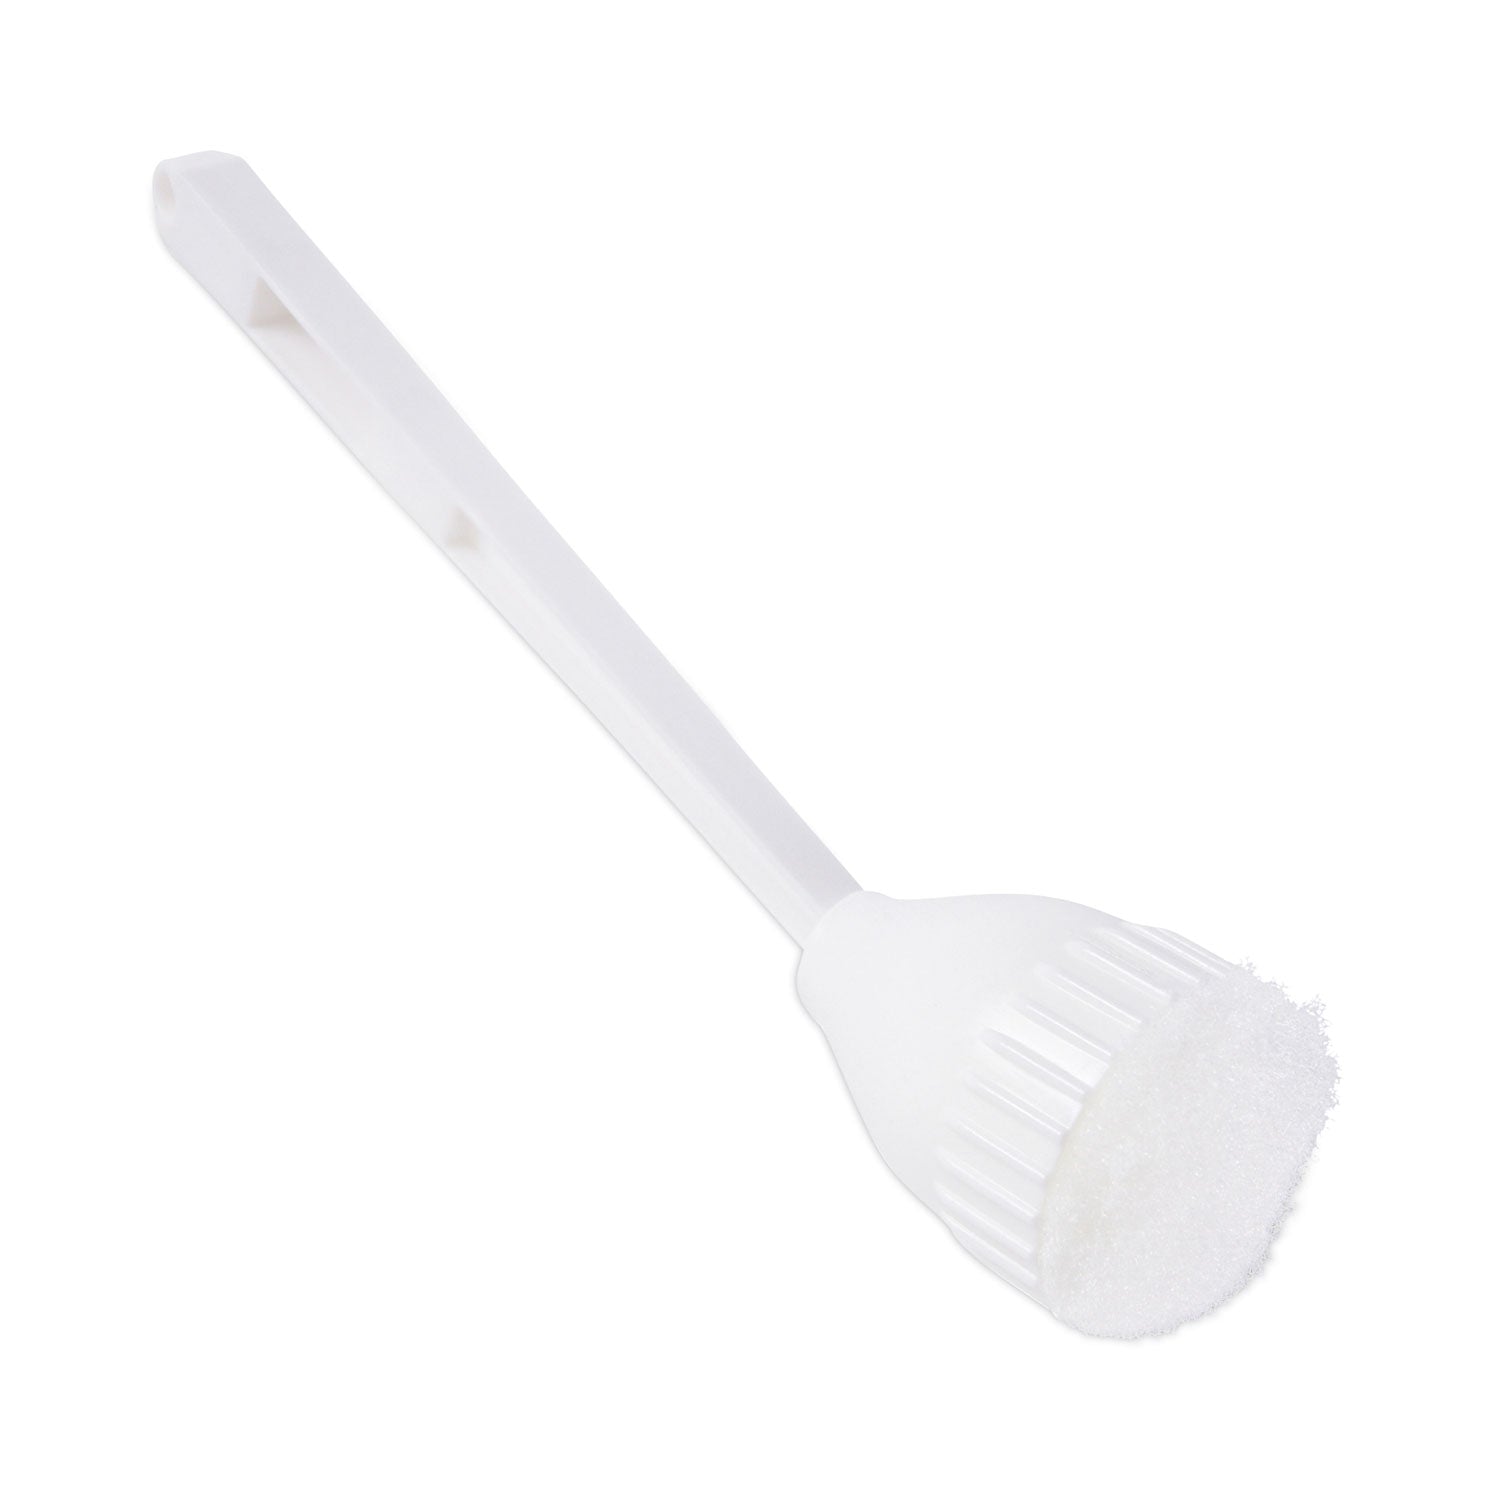 Cone Bowl Mop, 10" Handle, 2" Mop Head, White, 25/Carton - 